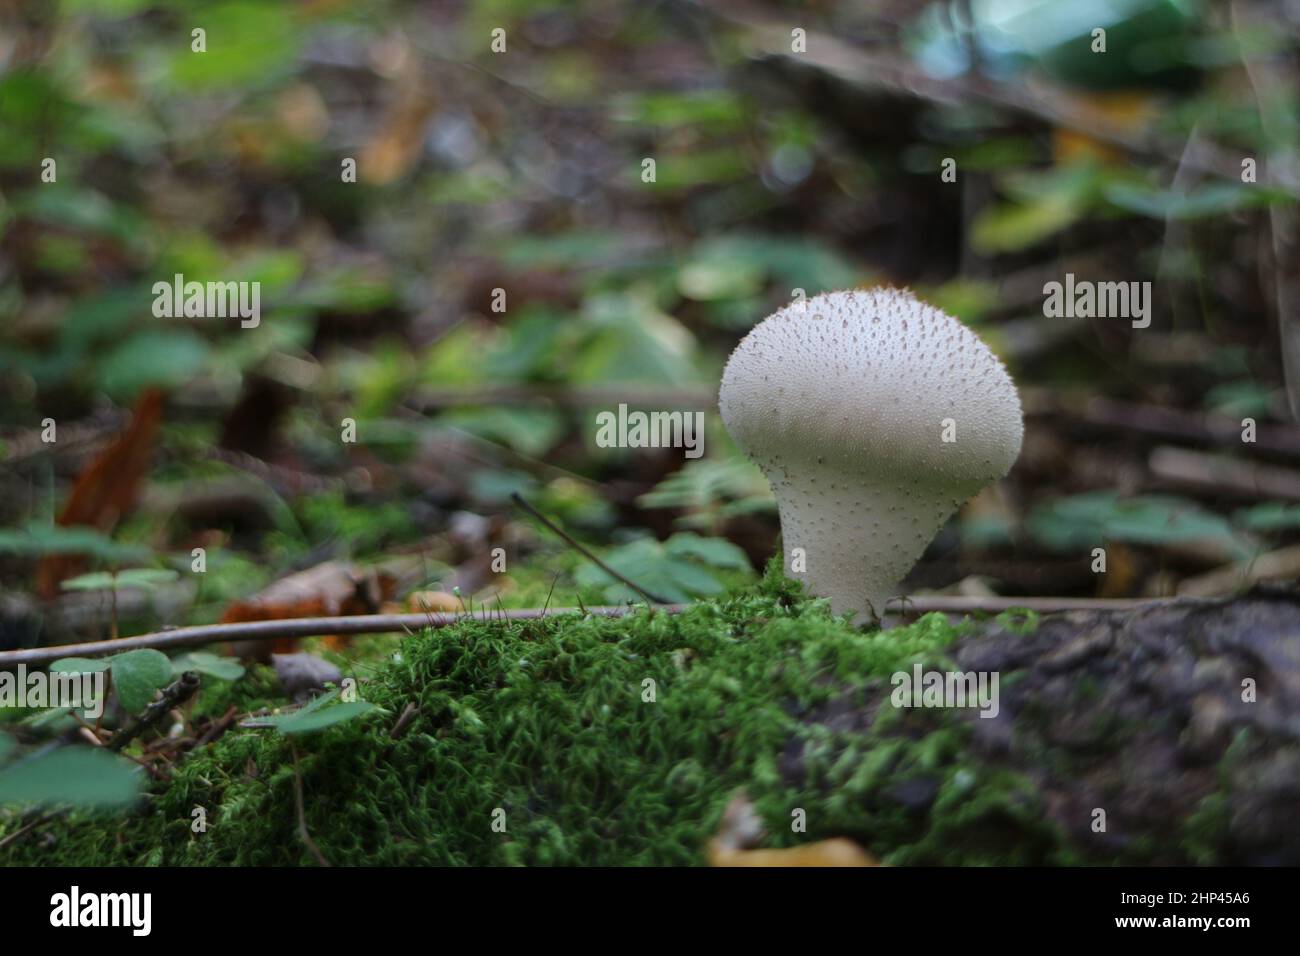 mushroom raincoat in nature close-up Stock Photo